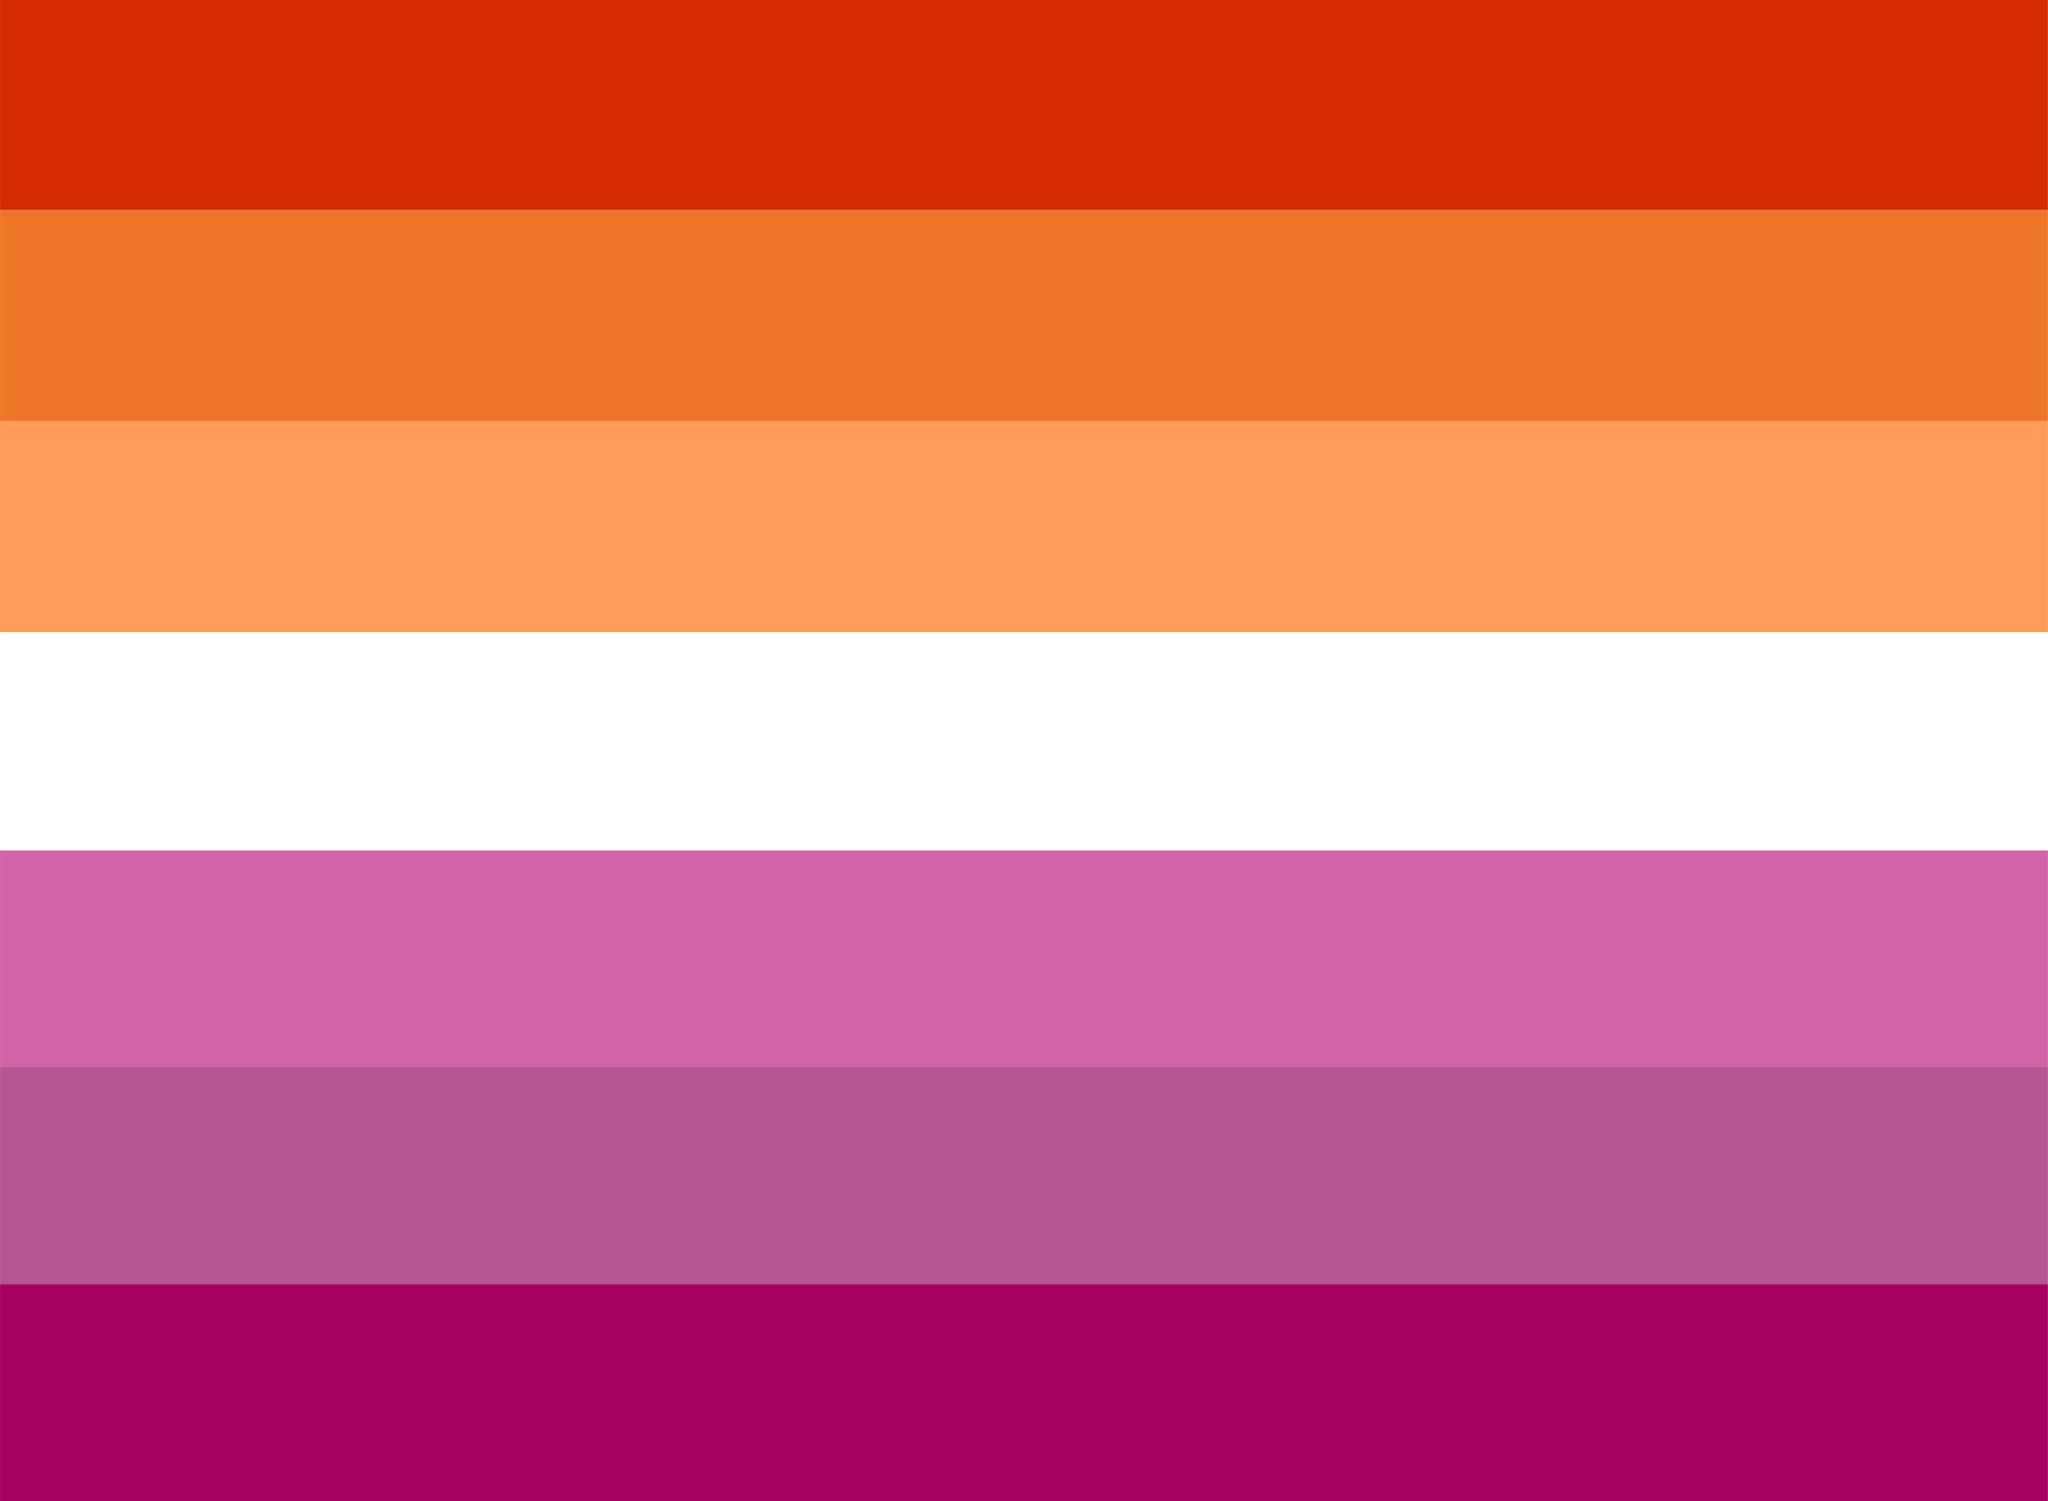 Lesbian Flag Illustration